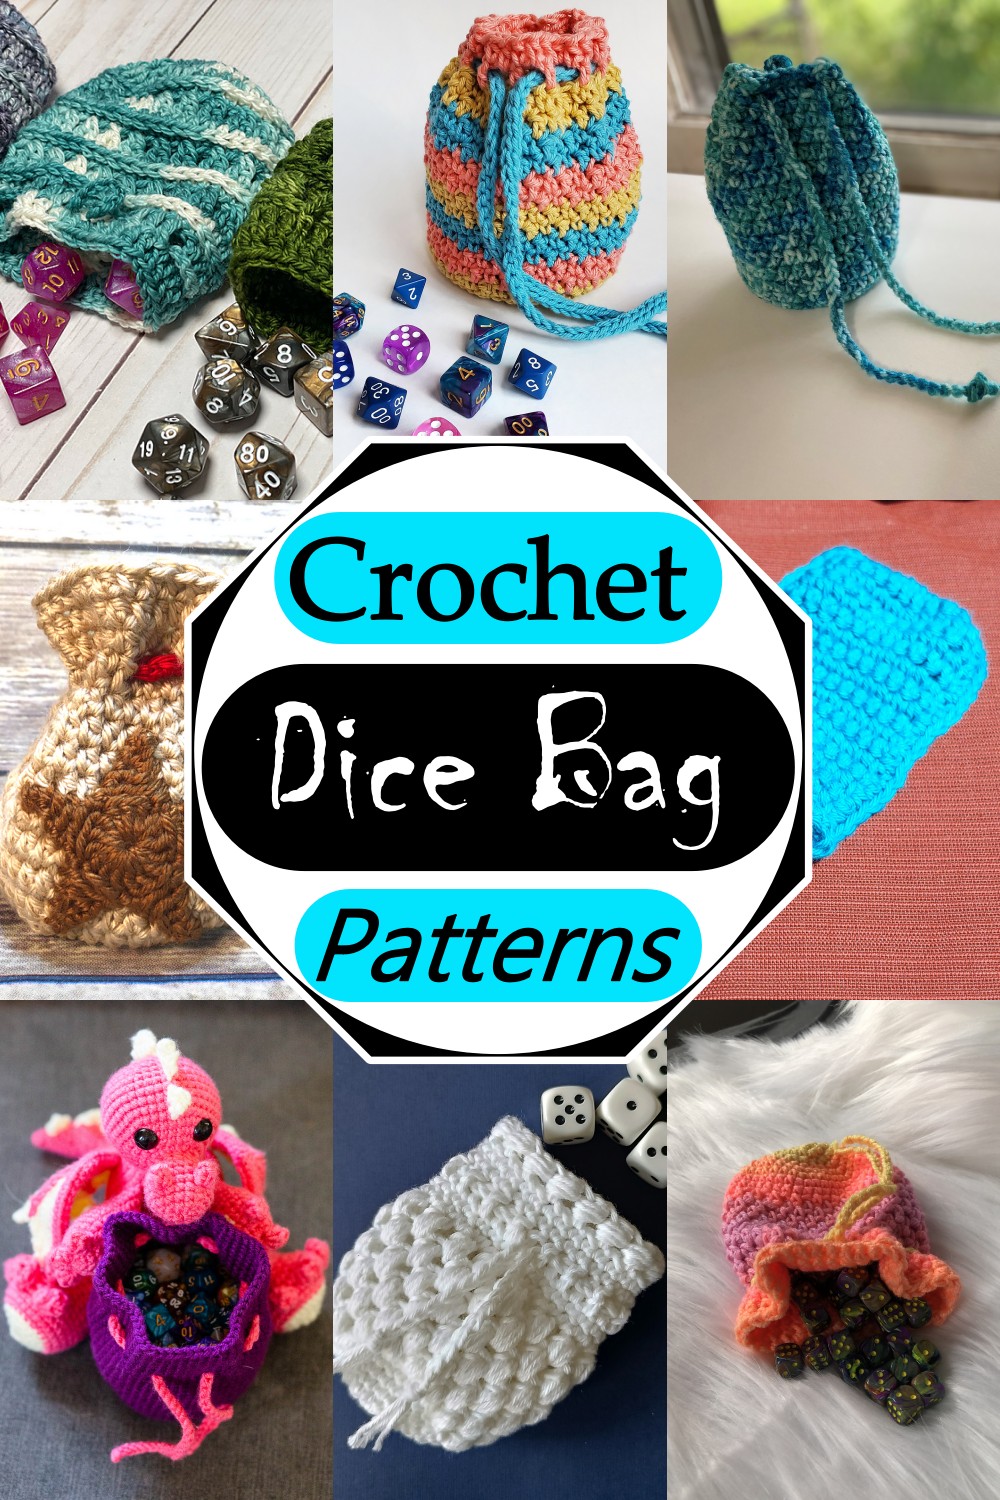 Crochet Dice Bag Patterns